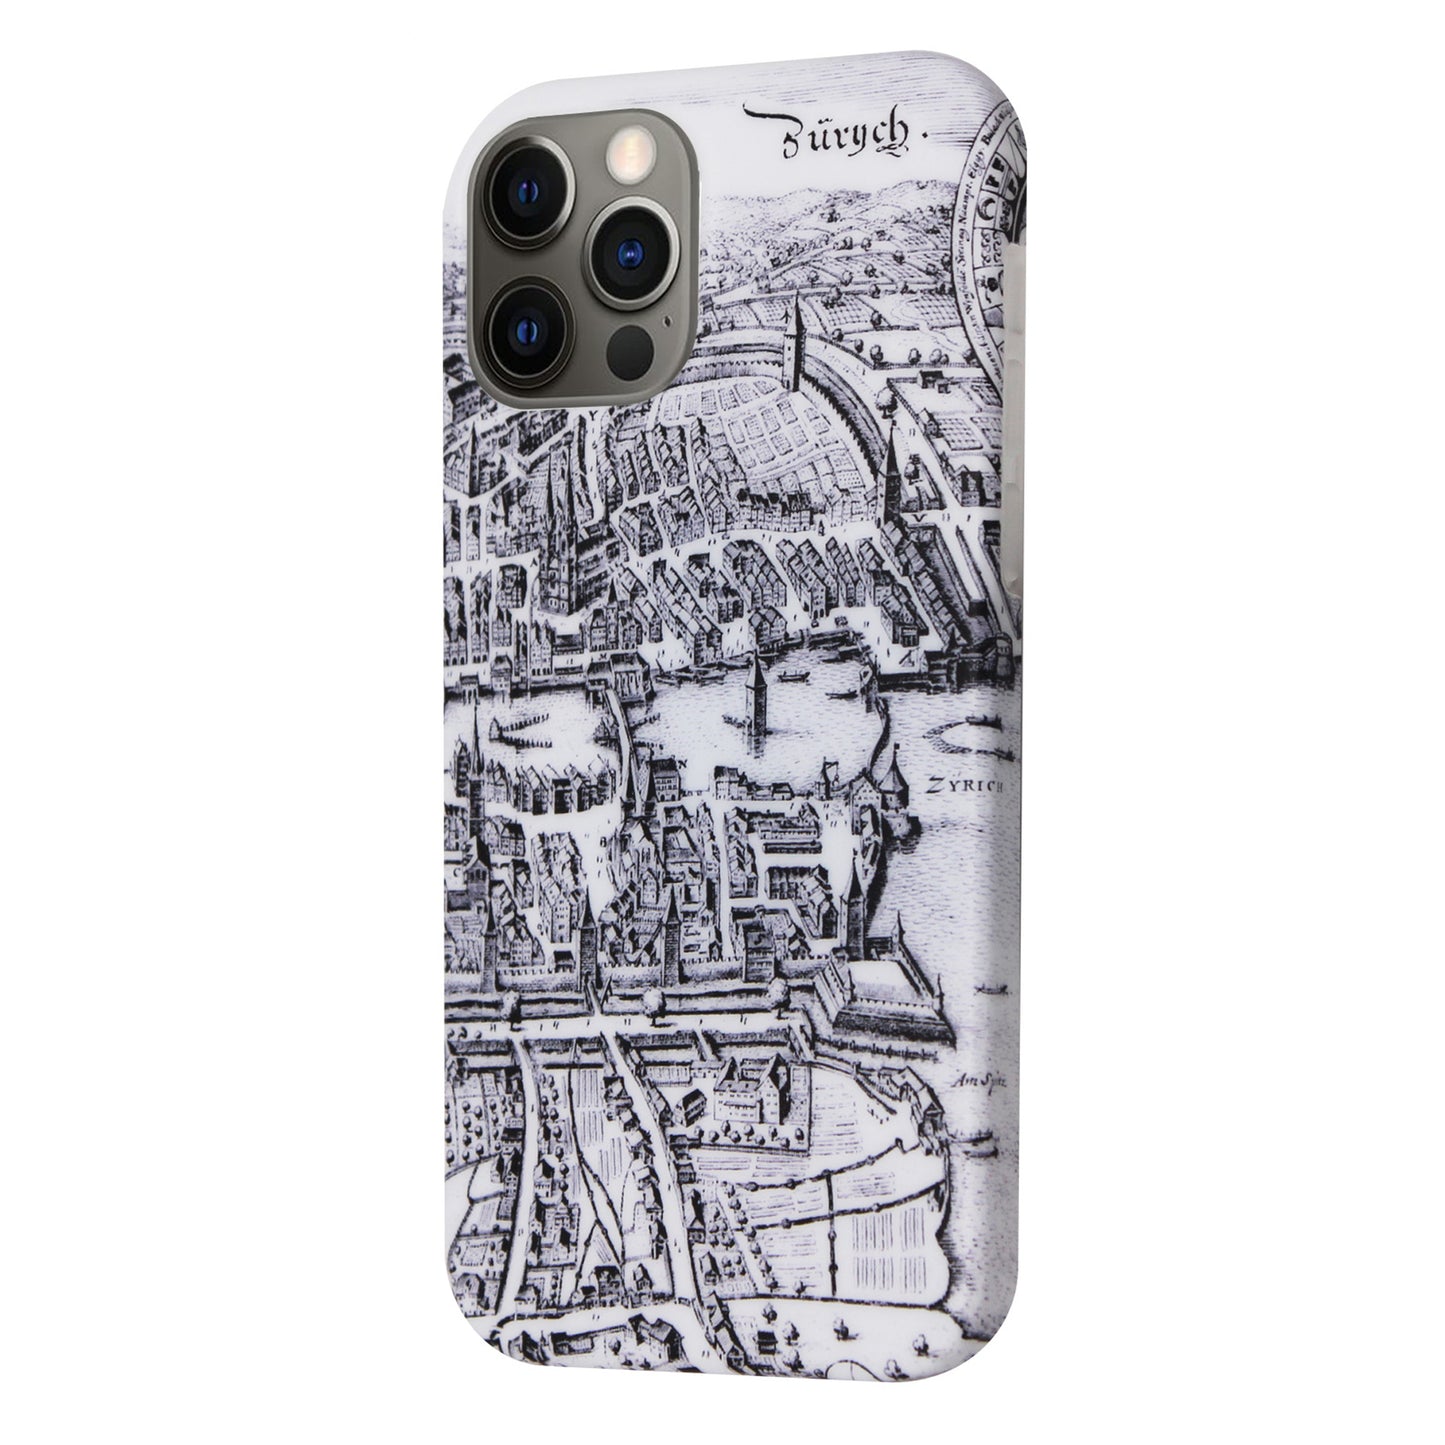 Zurich Merian 360° Case for iPhone 12 Pro Max